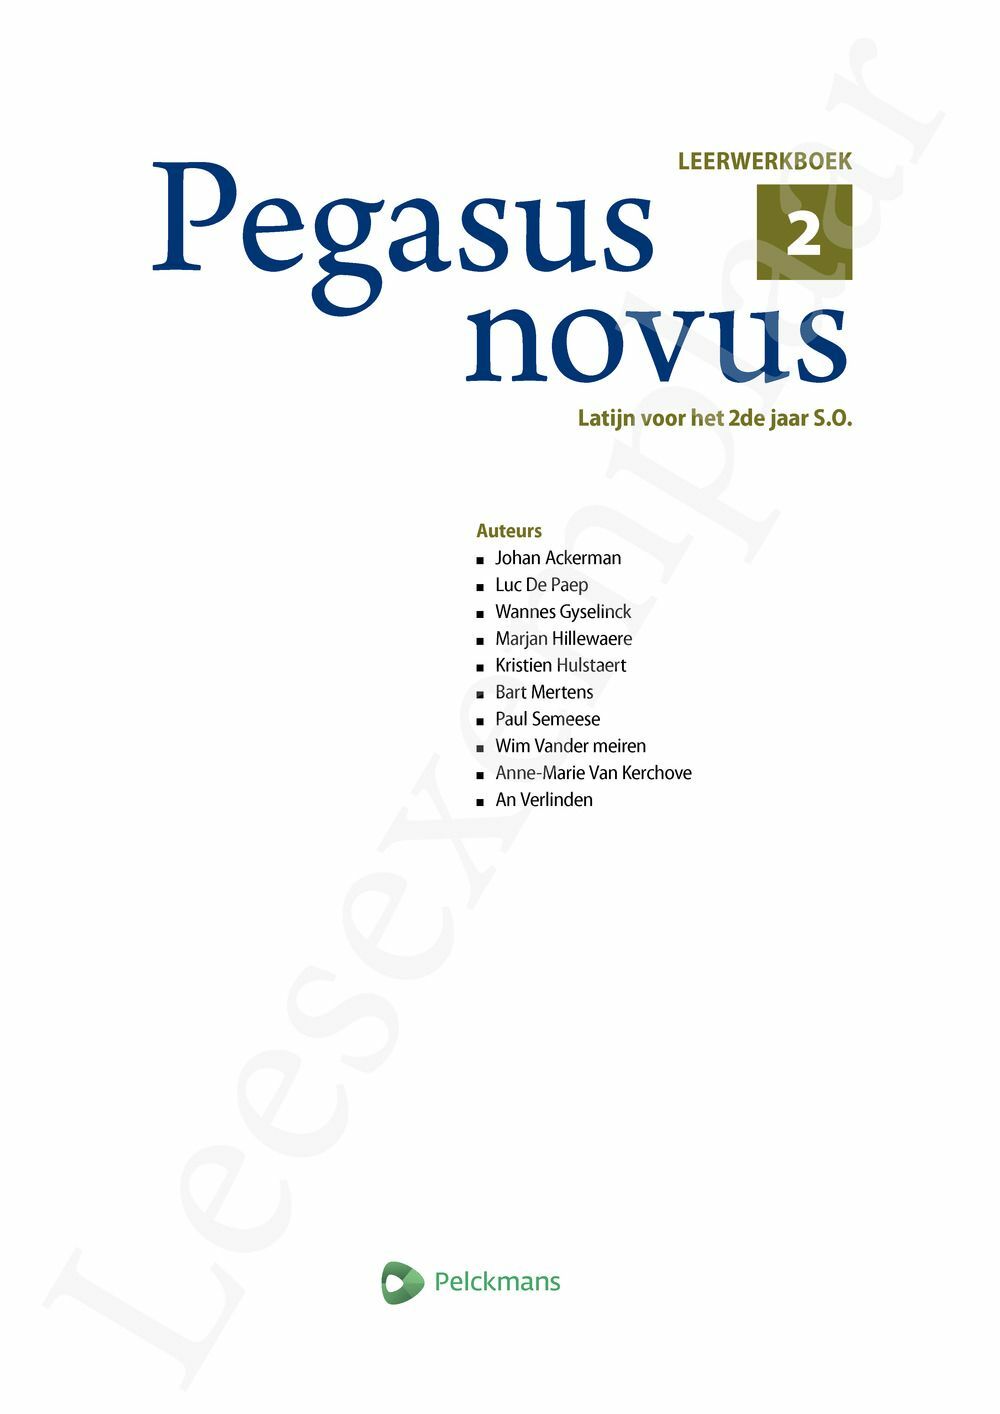 Preview: Pegasus novus 2 Leerwerkboek (incl. Woordenlijst, Cultuurkatern en Pelckmans Portaal)